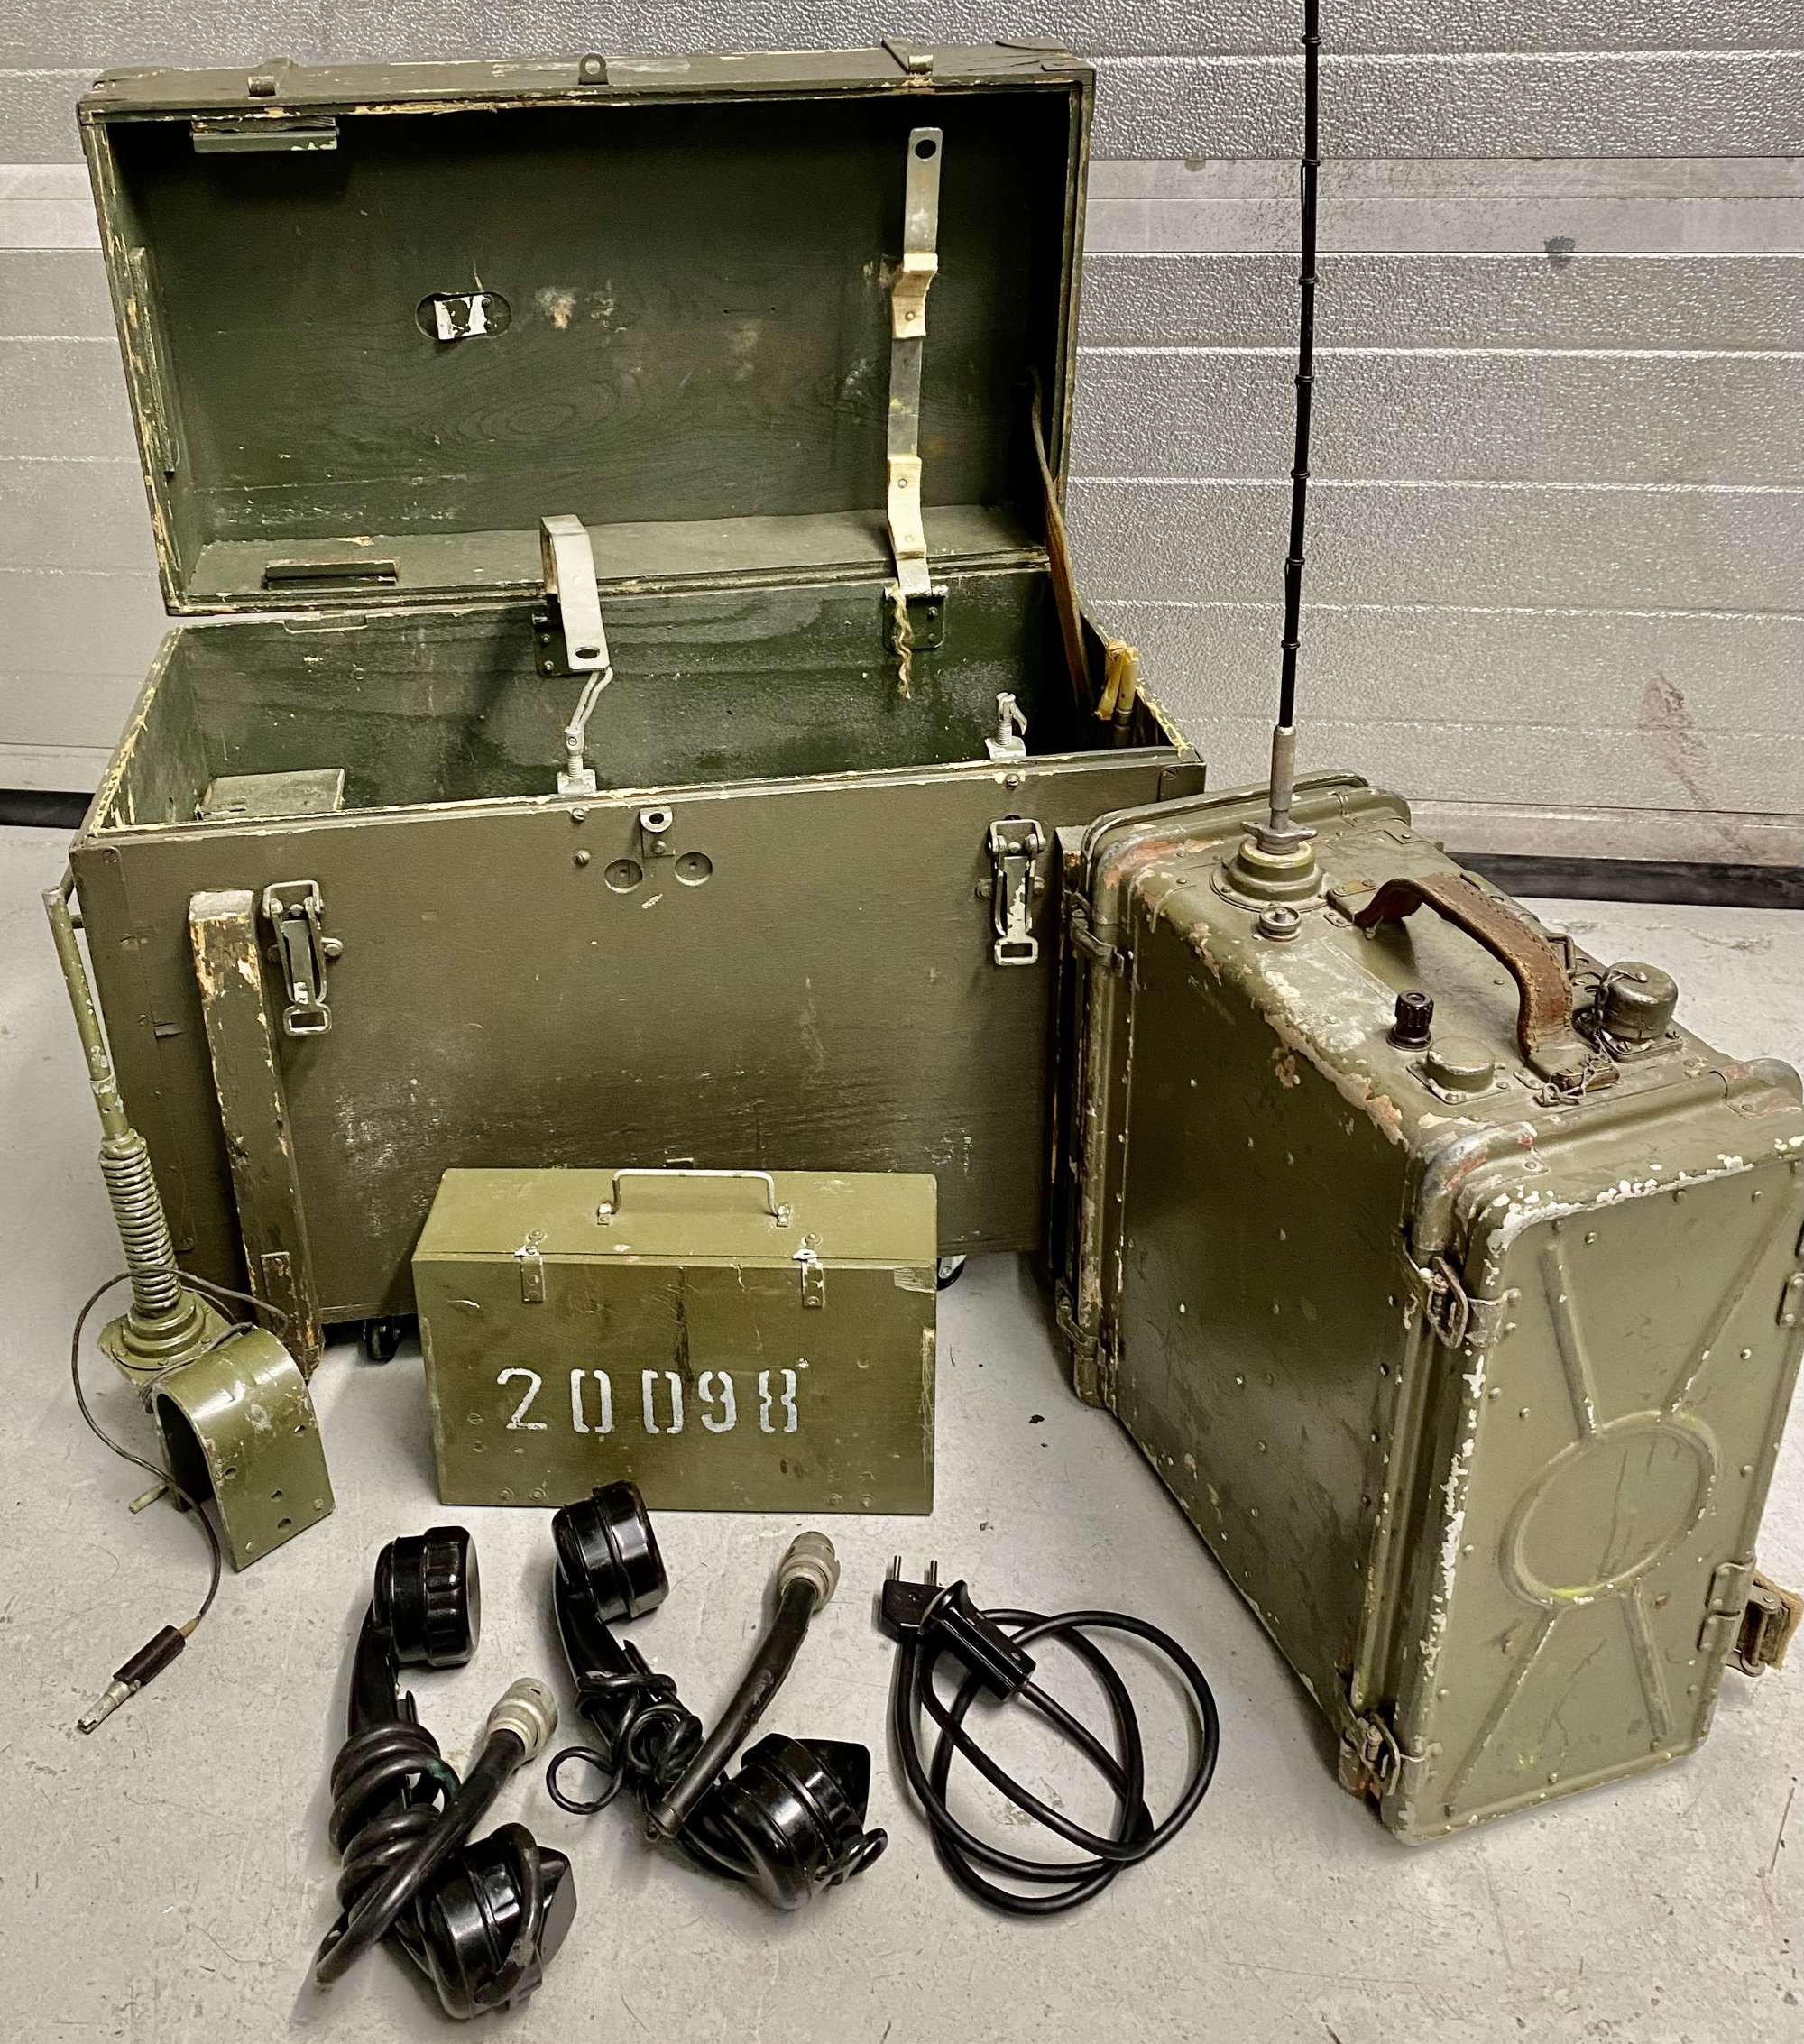 Polish Army Soviet Era R-105 Radio Transceiver with Transit Case & Accessories